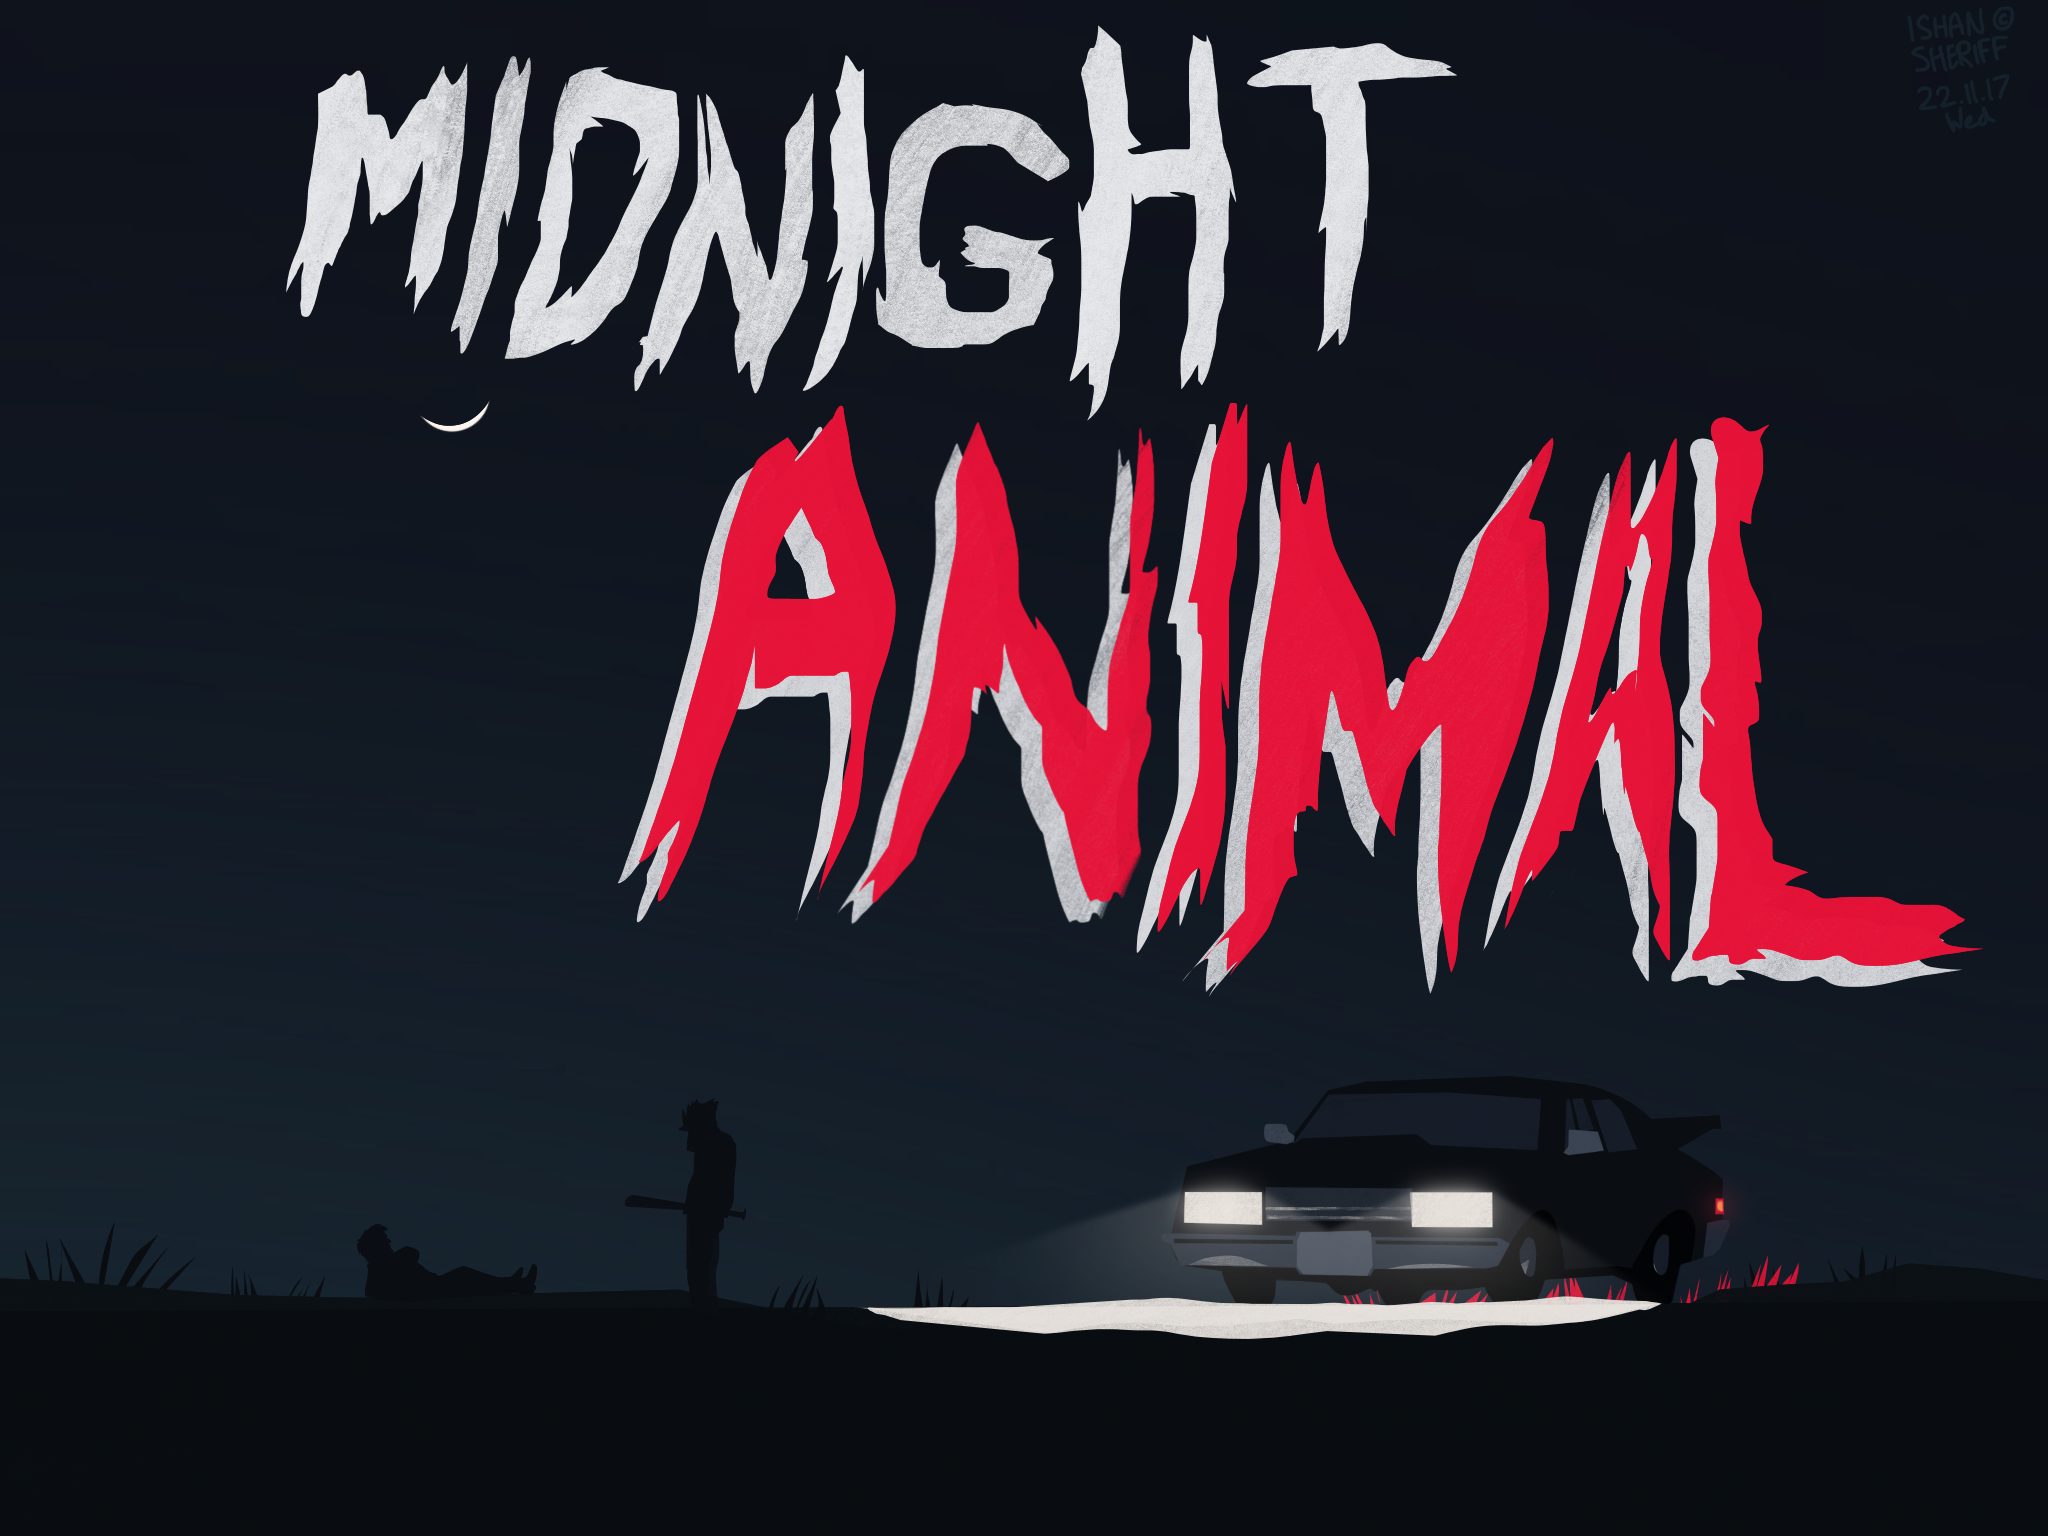 Midnight animal. Миднайт Энимал Хотлайн Майами. Миднайт Энимал. Midnight animal игра. Hotline Miami 2 Midnight animal.